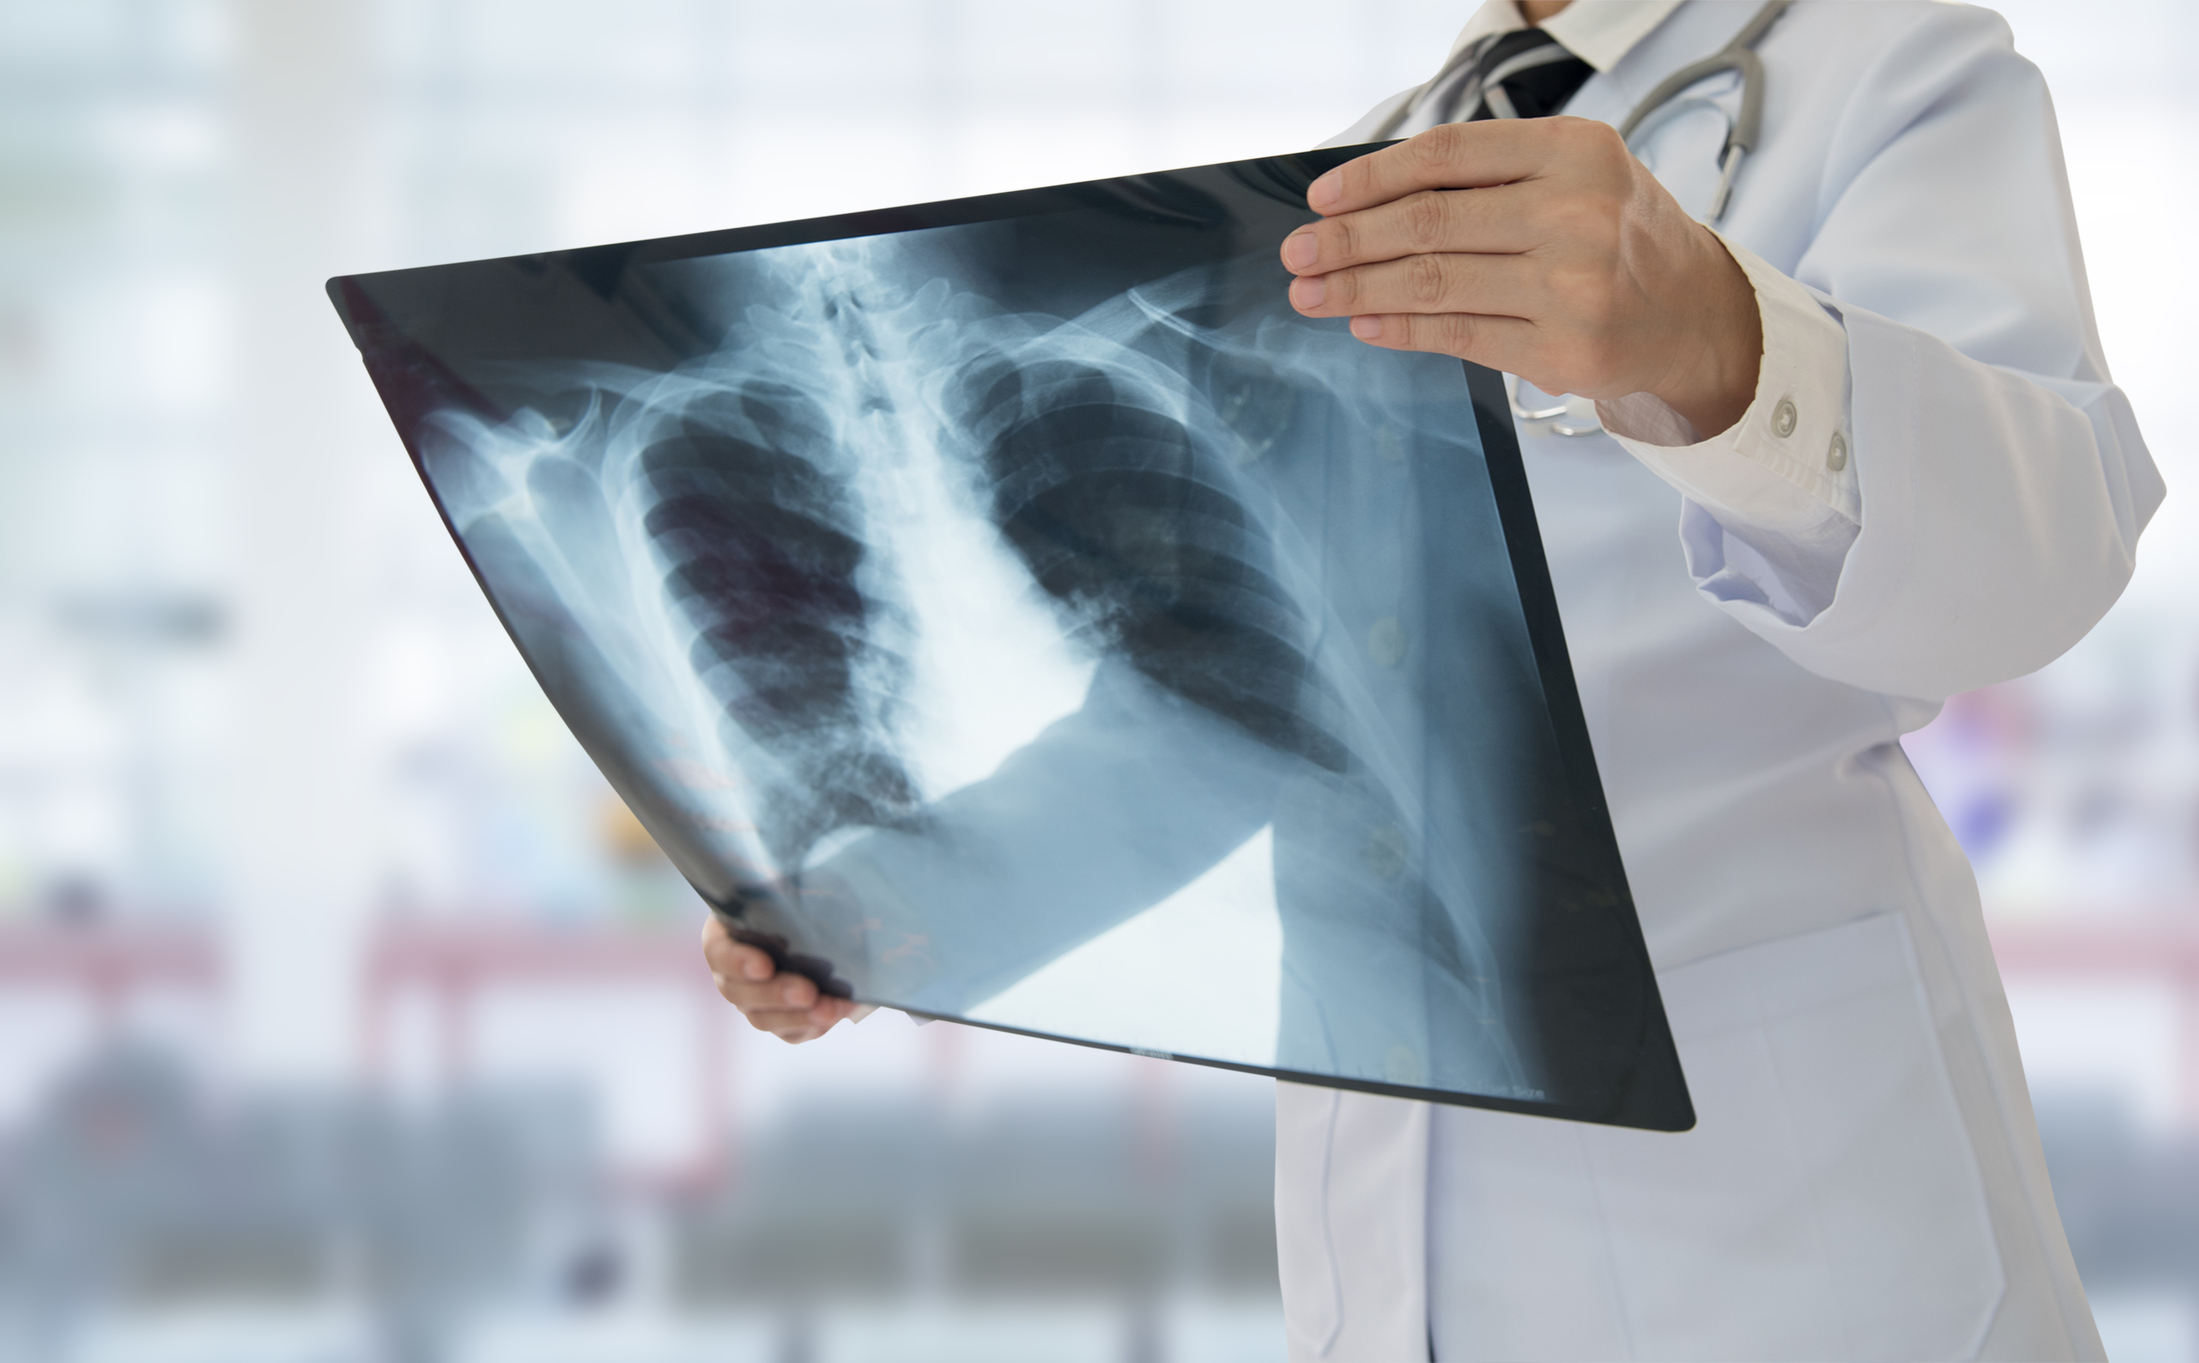 Spinal X-Ray Imaging: Risks vs Benefits